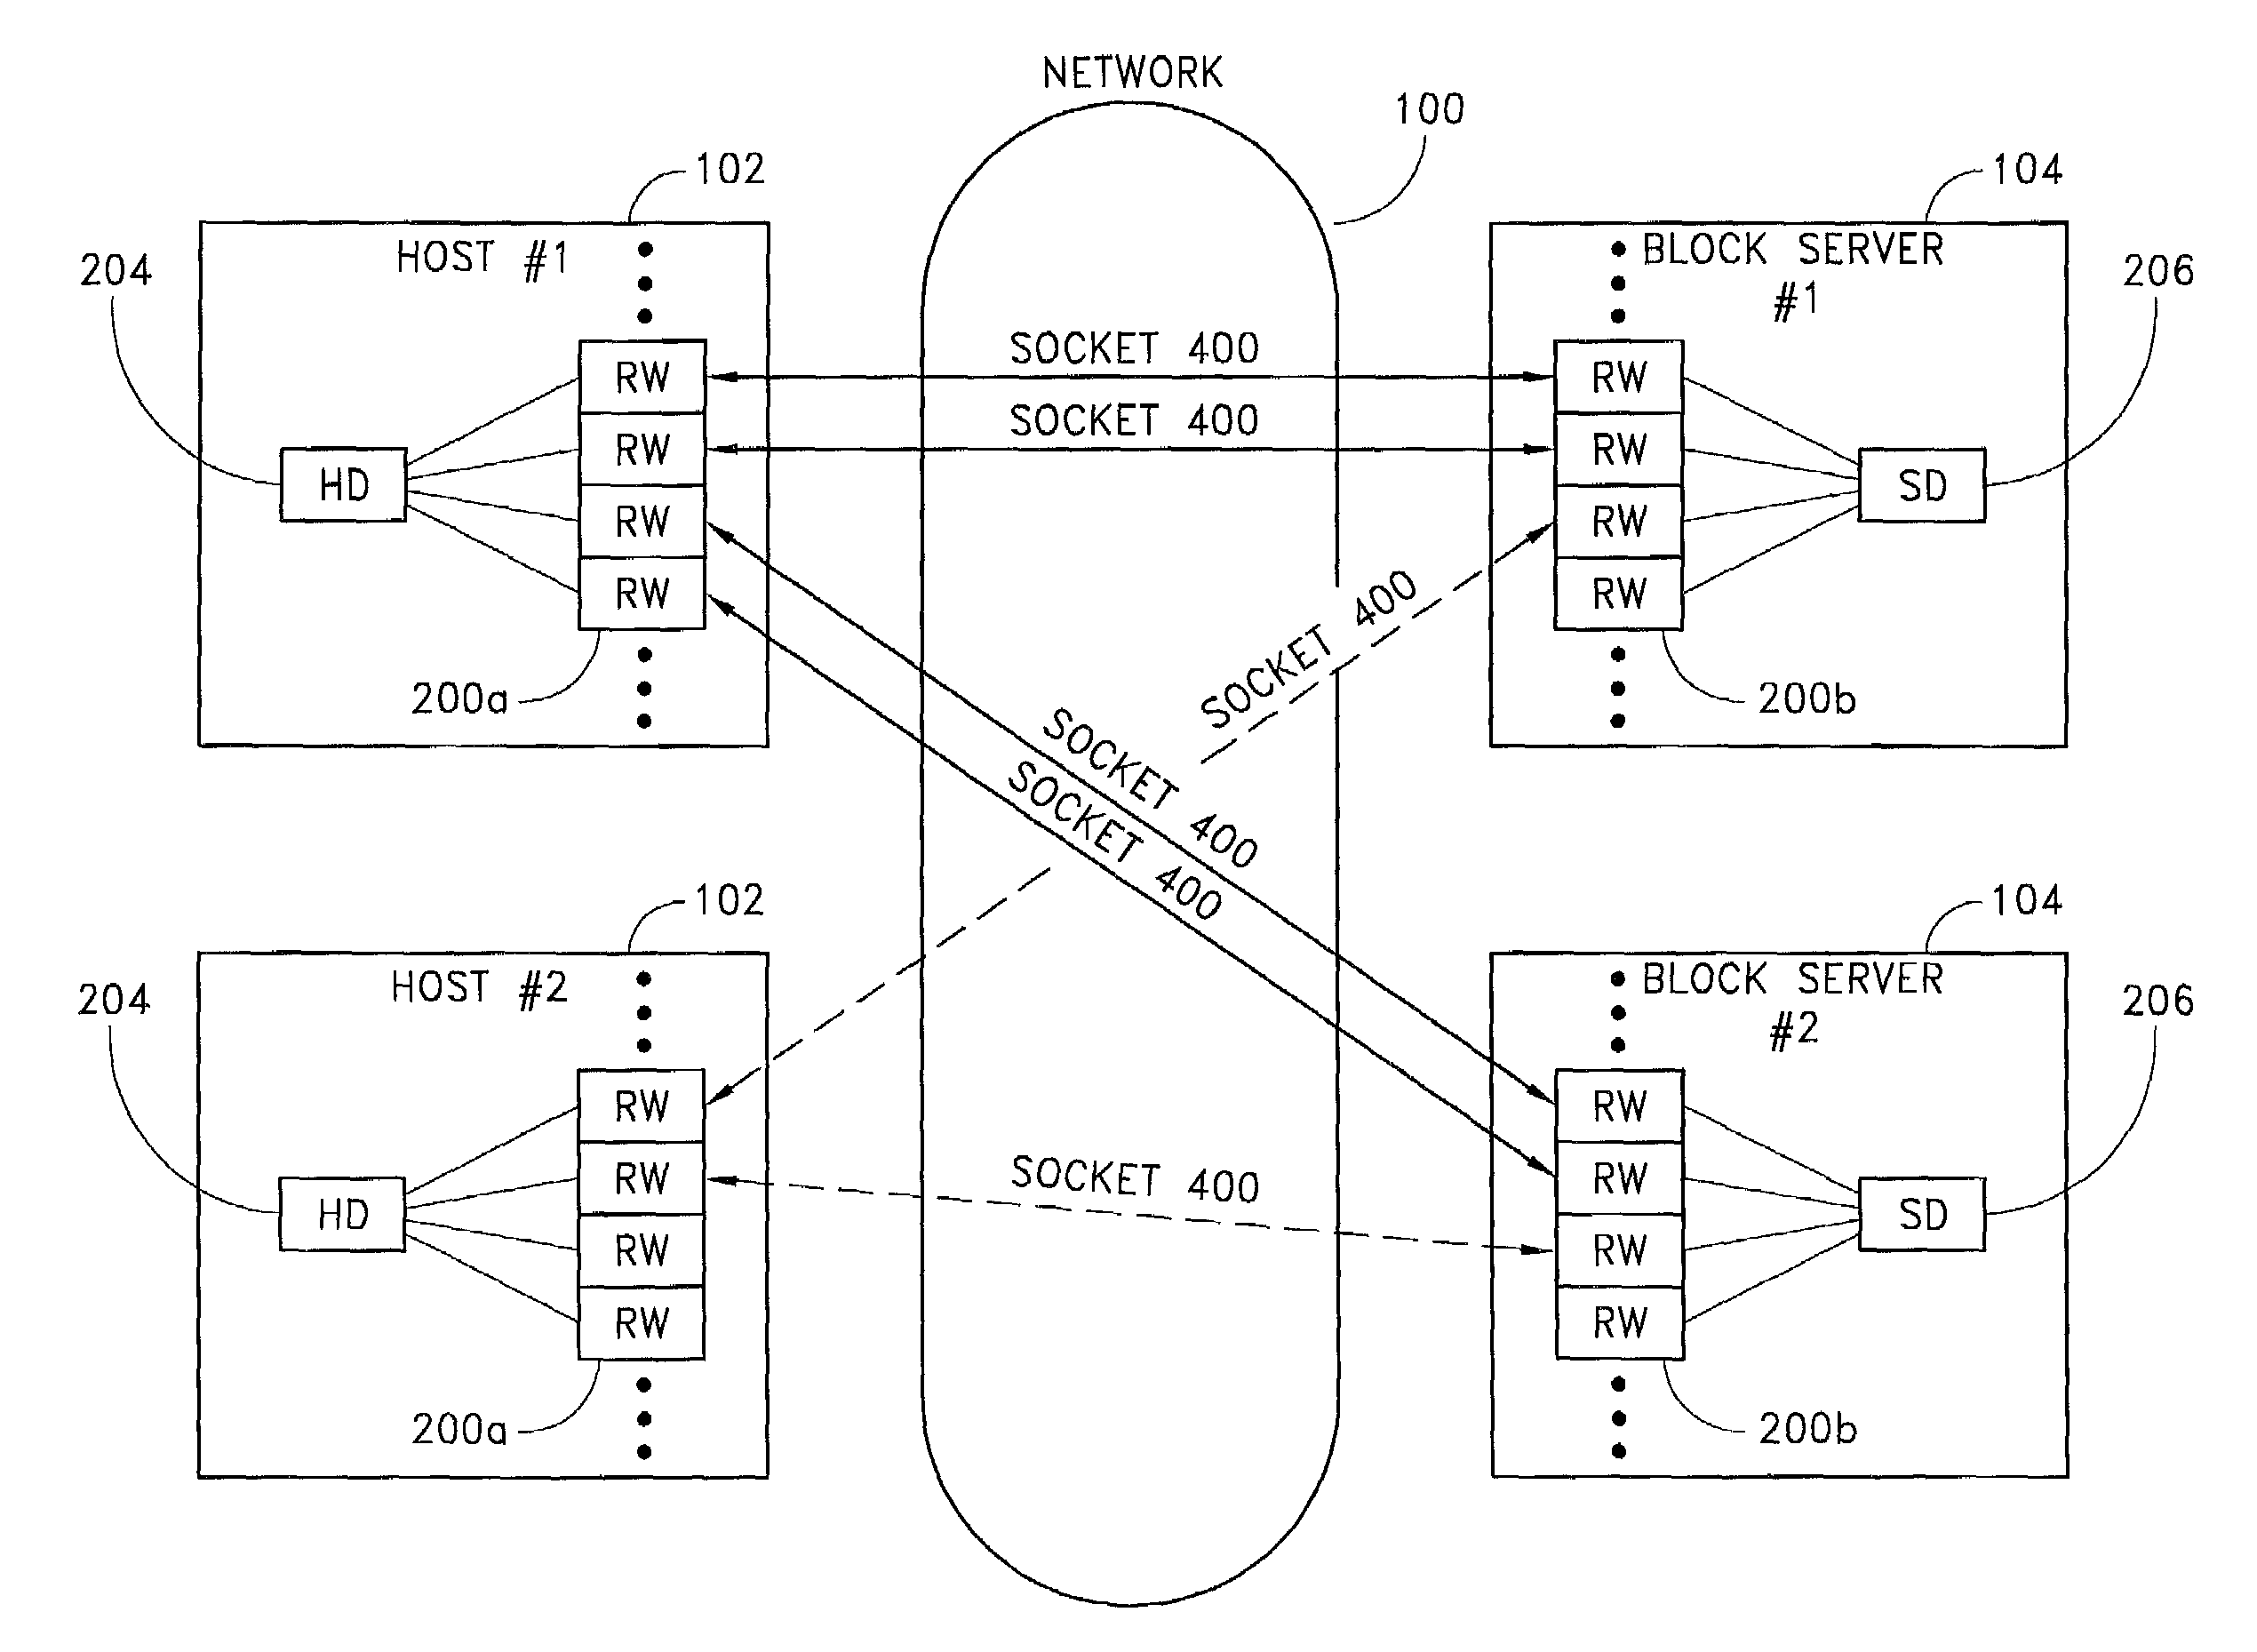 Architecture for providing block-level storage access over a computer network